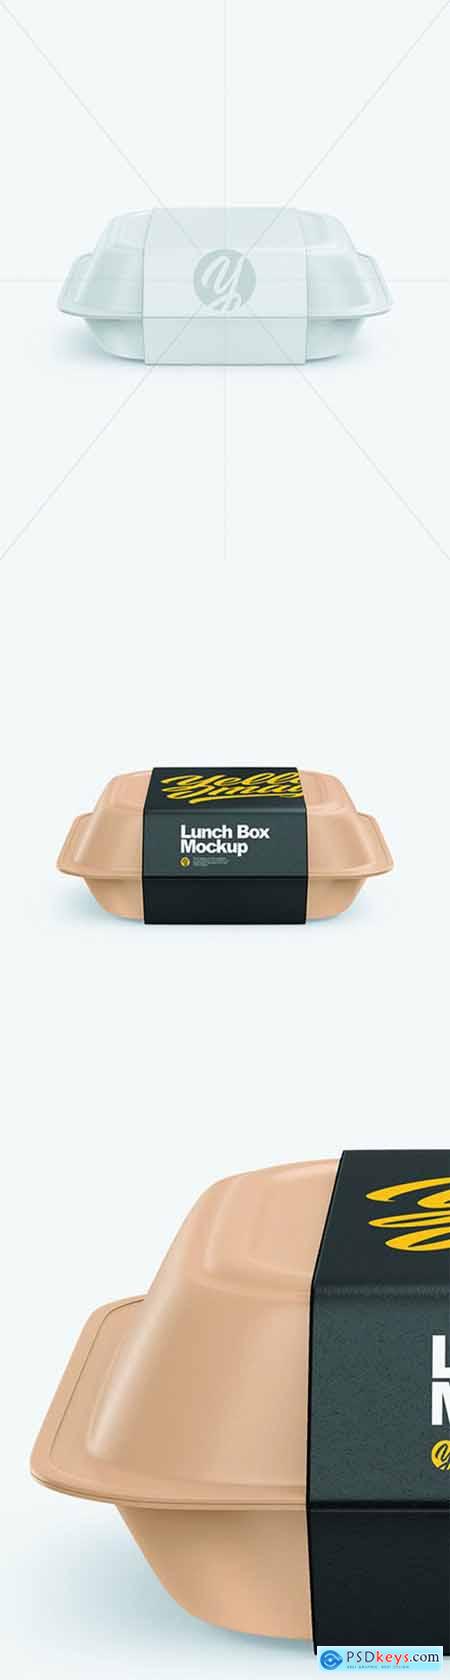 Lunch Box Mockup 68872